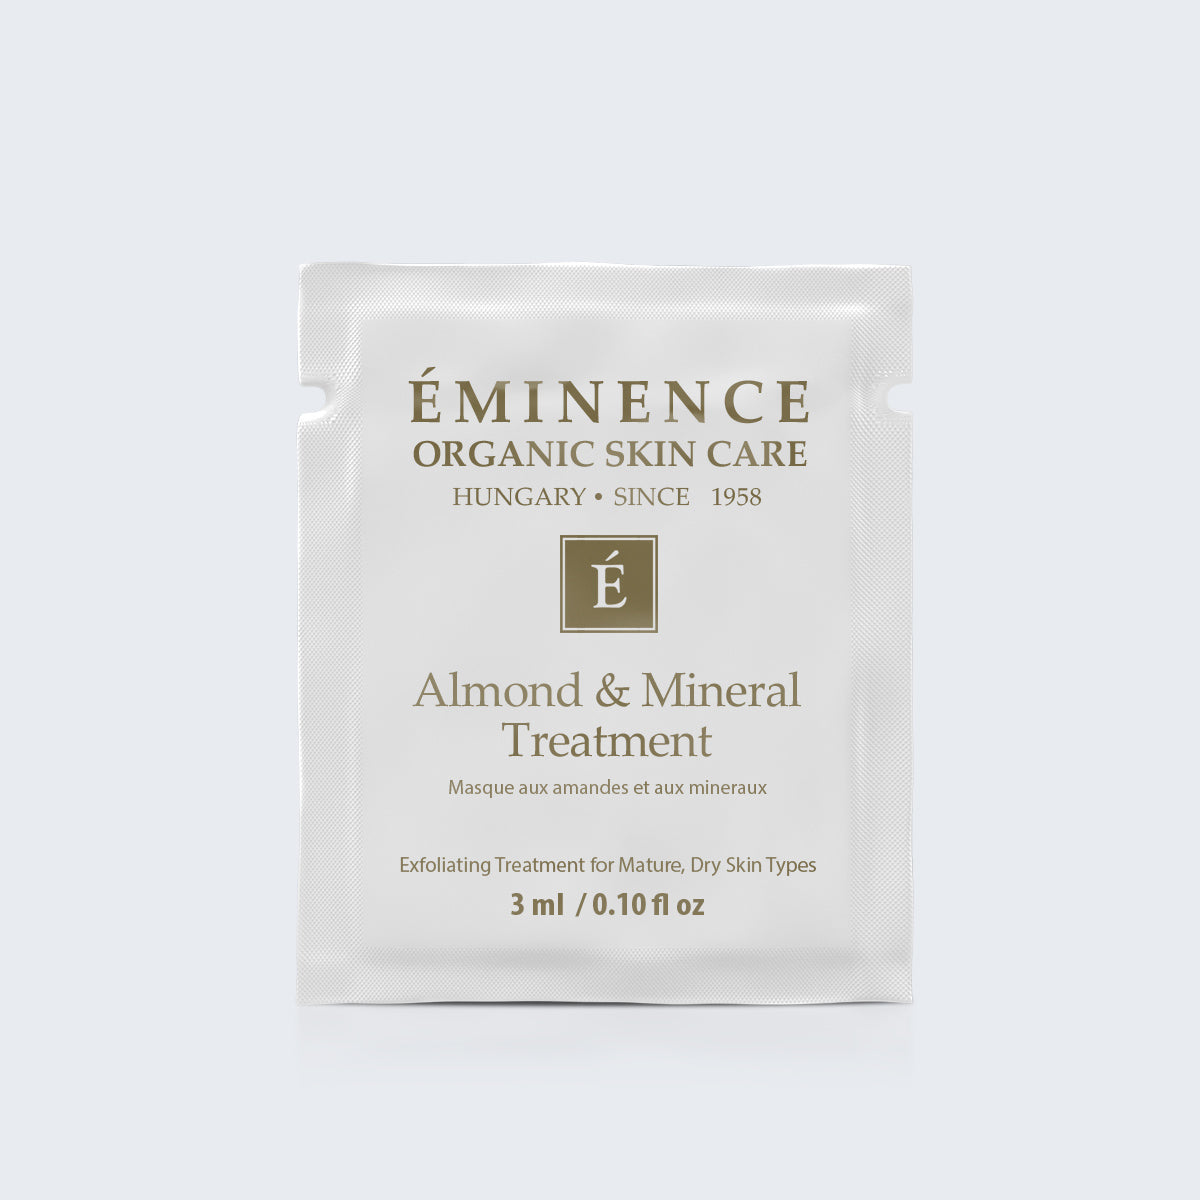 Eminence Organics Almond & Mineral Treatment Card Sample